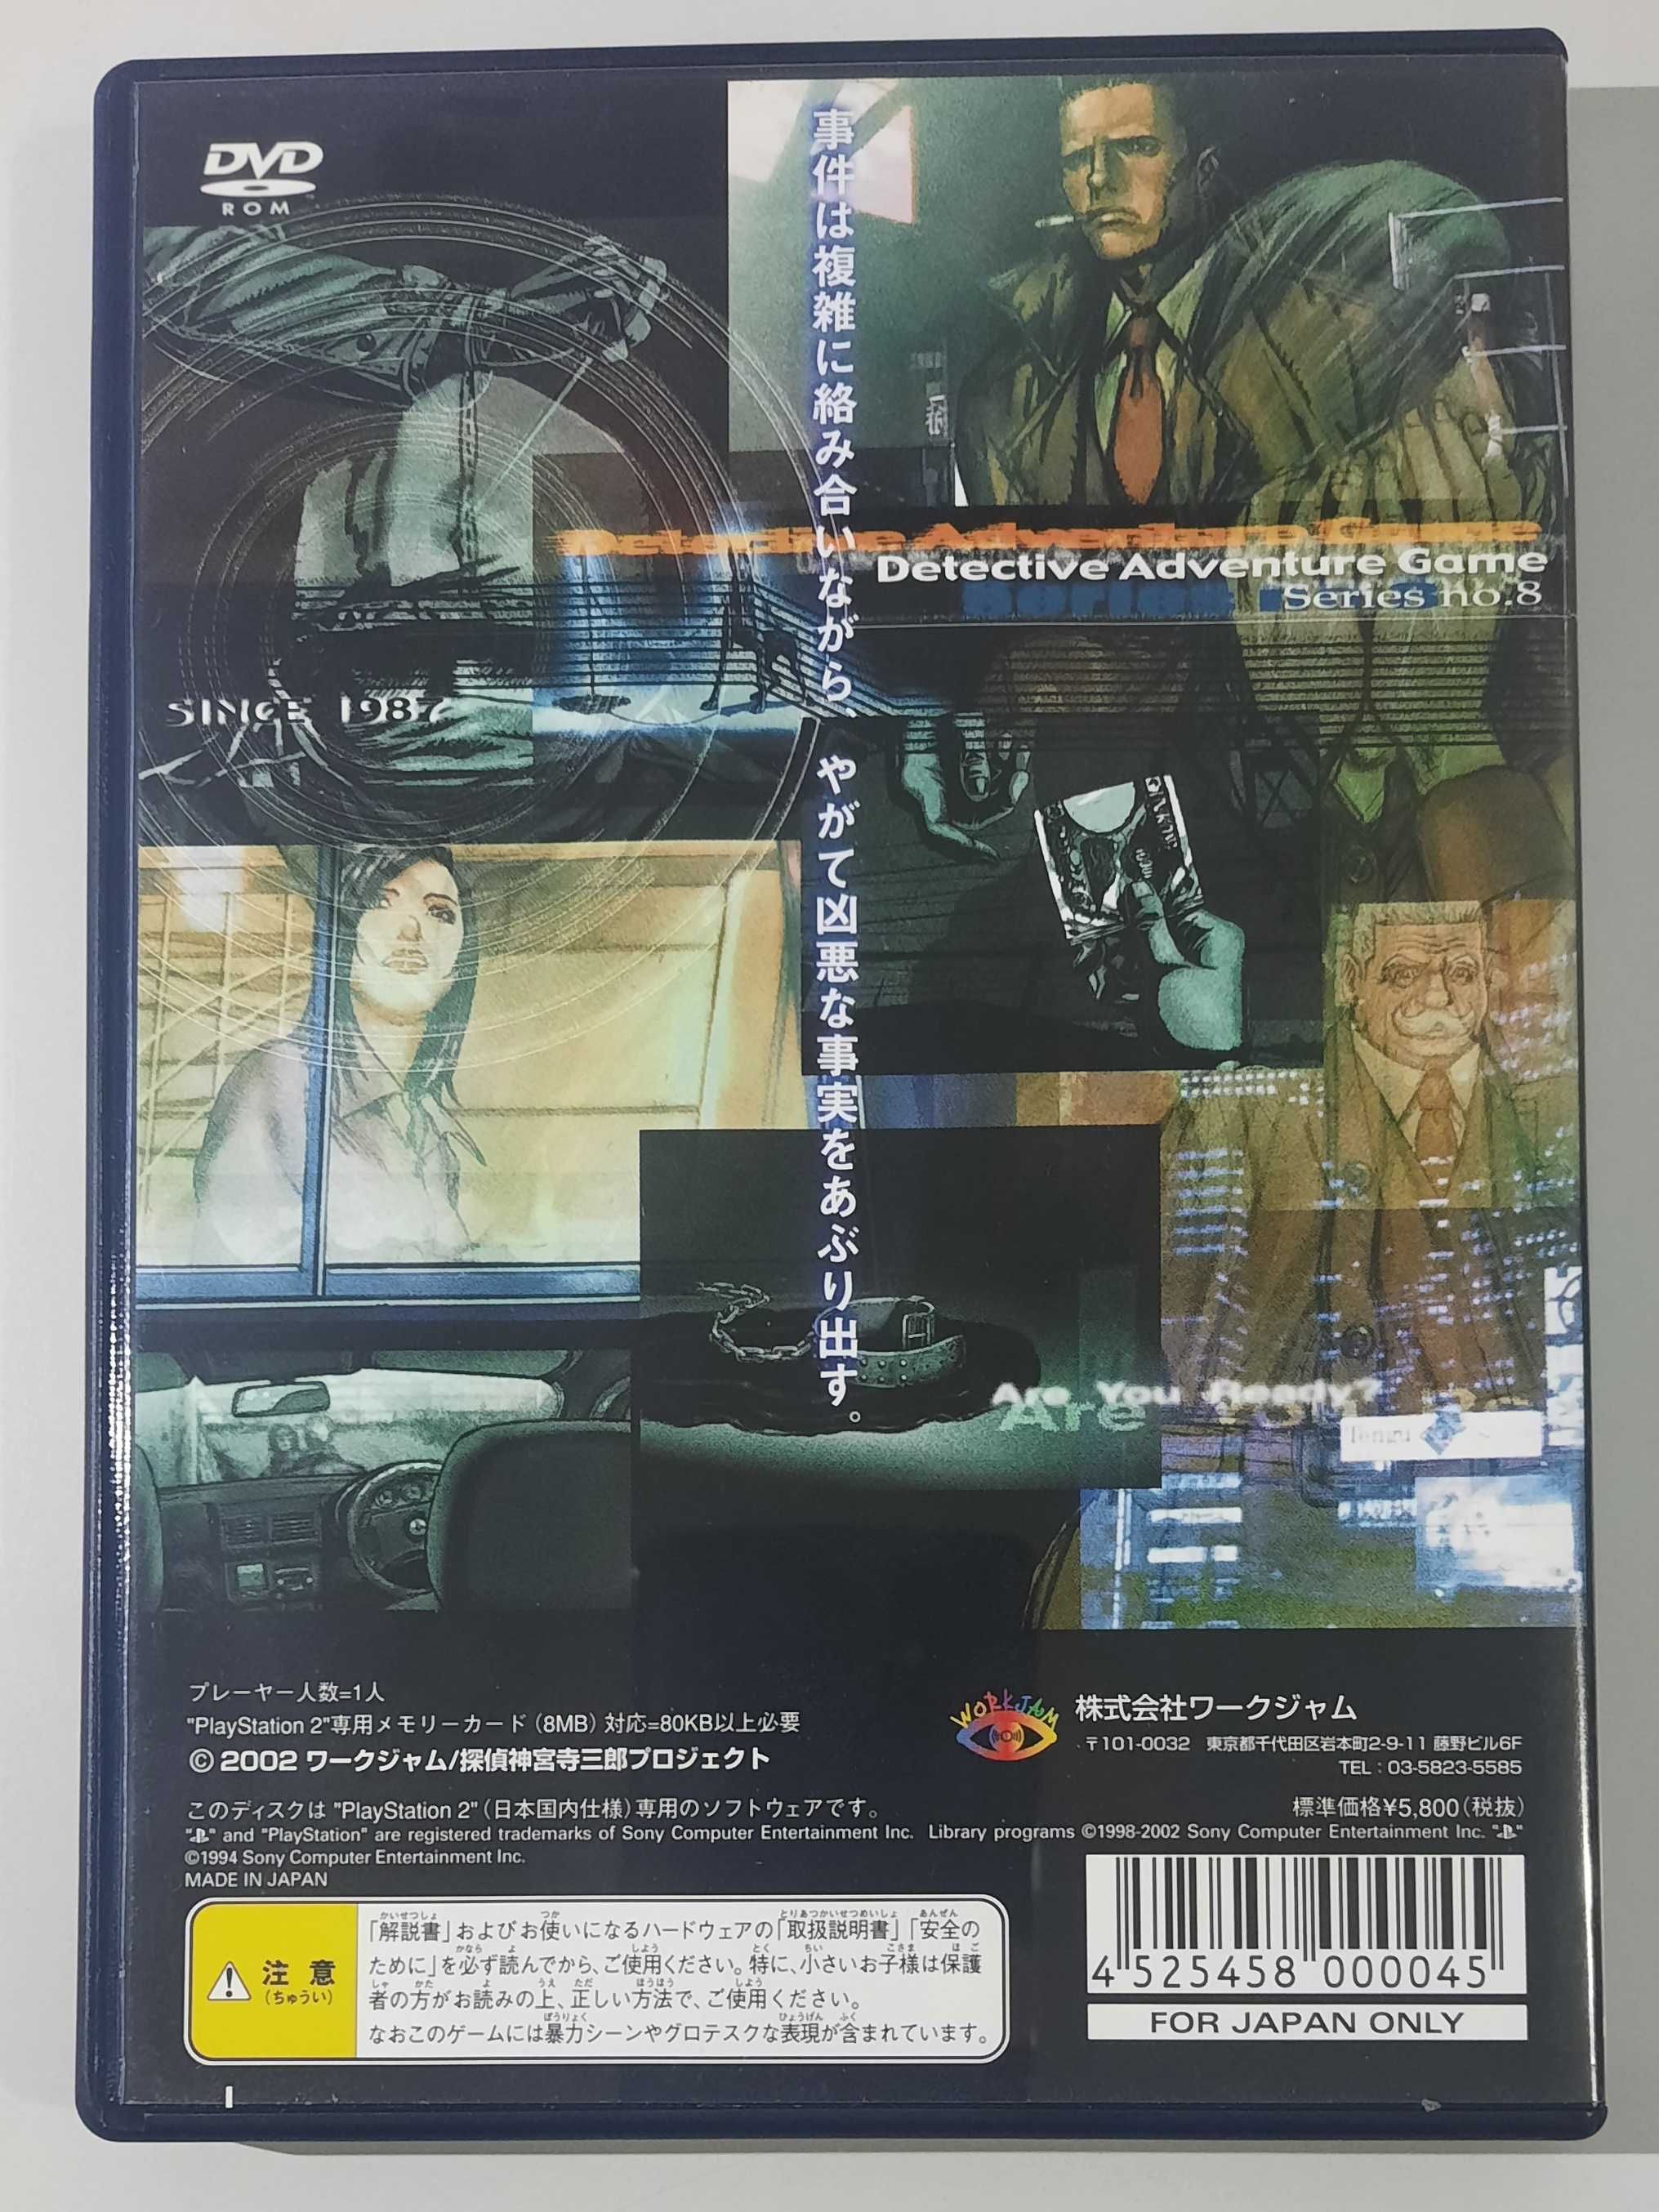 Tantei Jinguuji Saburo: Innocent Black / PS2 [NTSC-J]